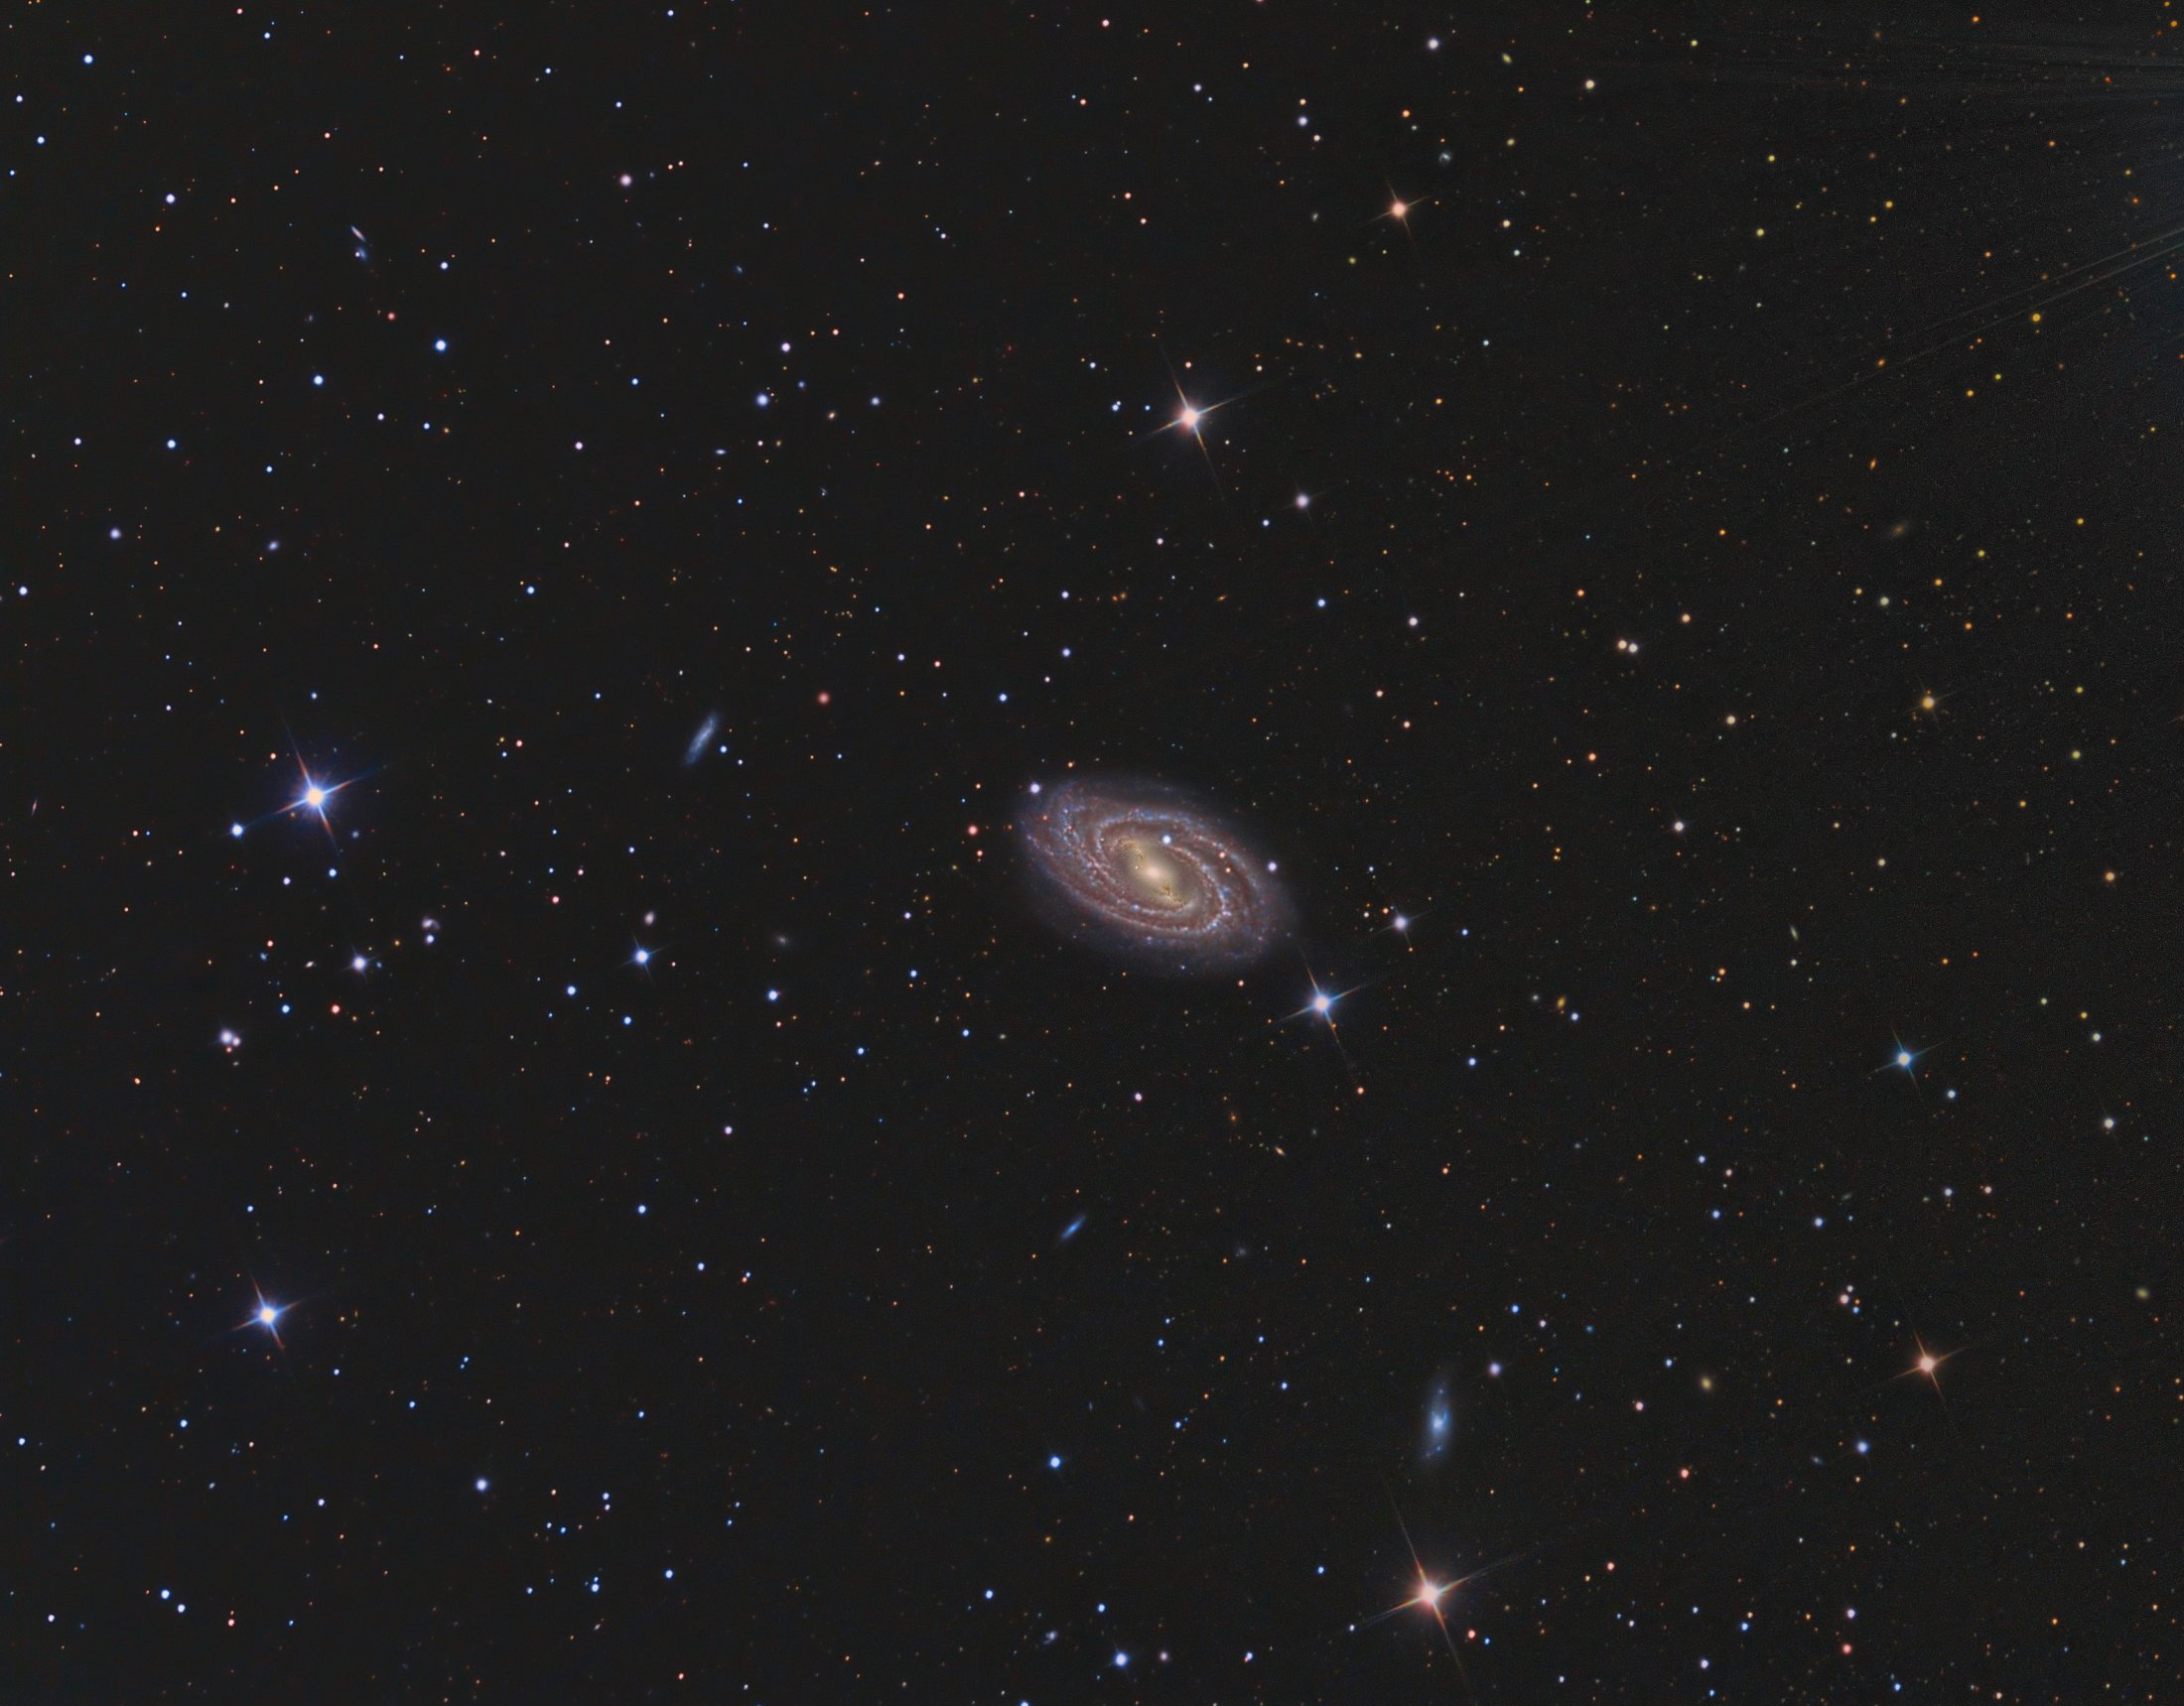 M109 galaxy